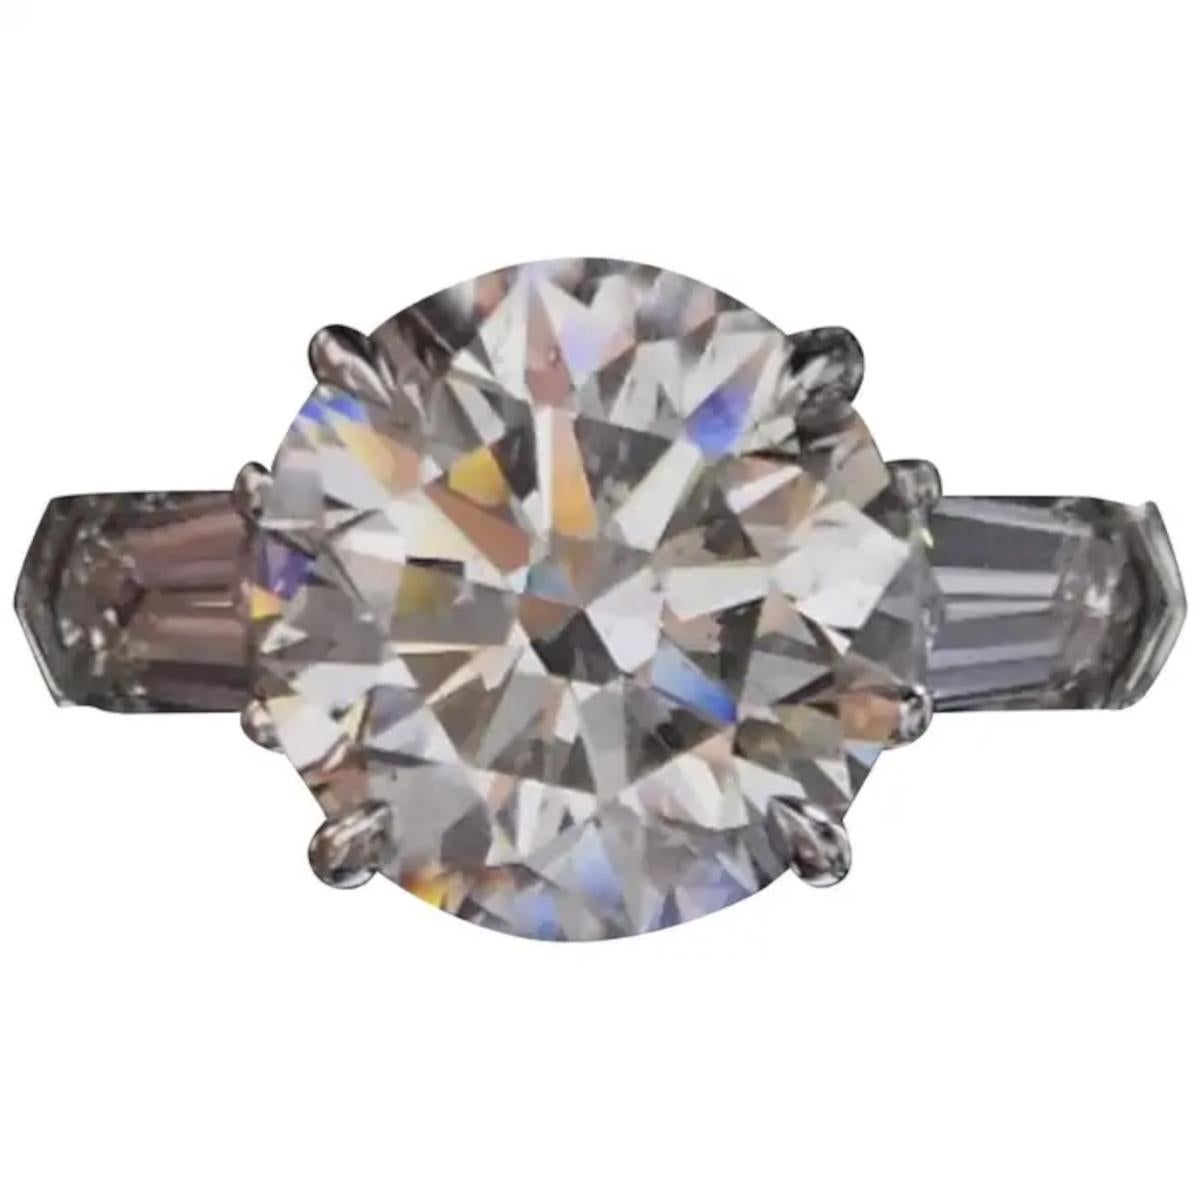 220 carat diamond